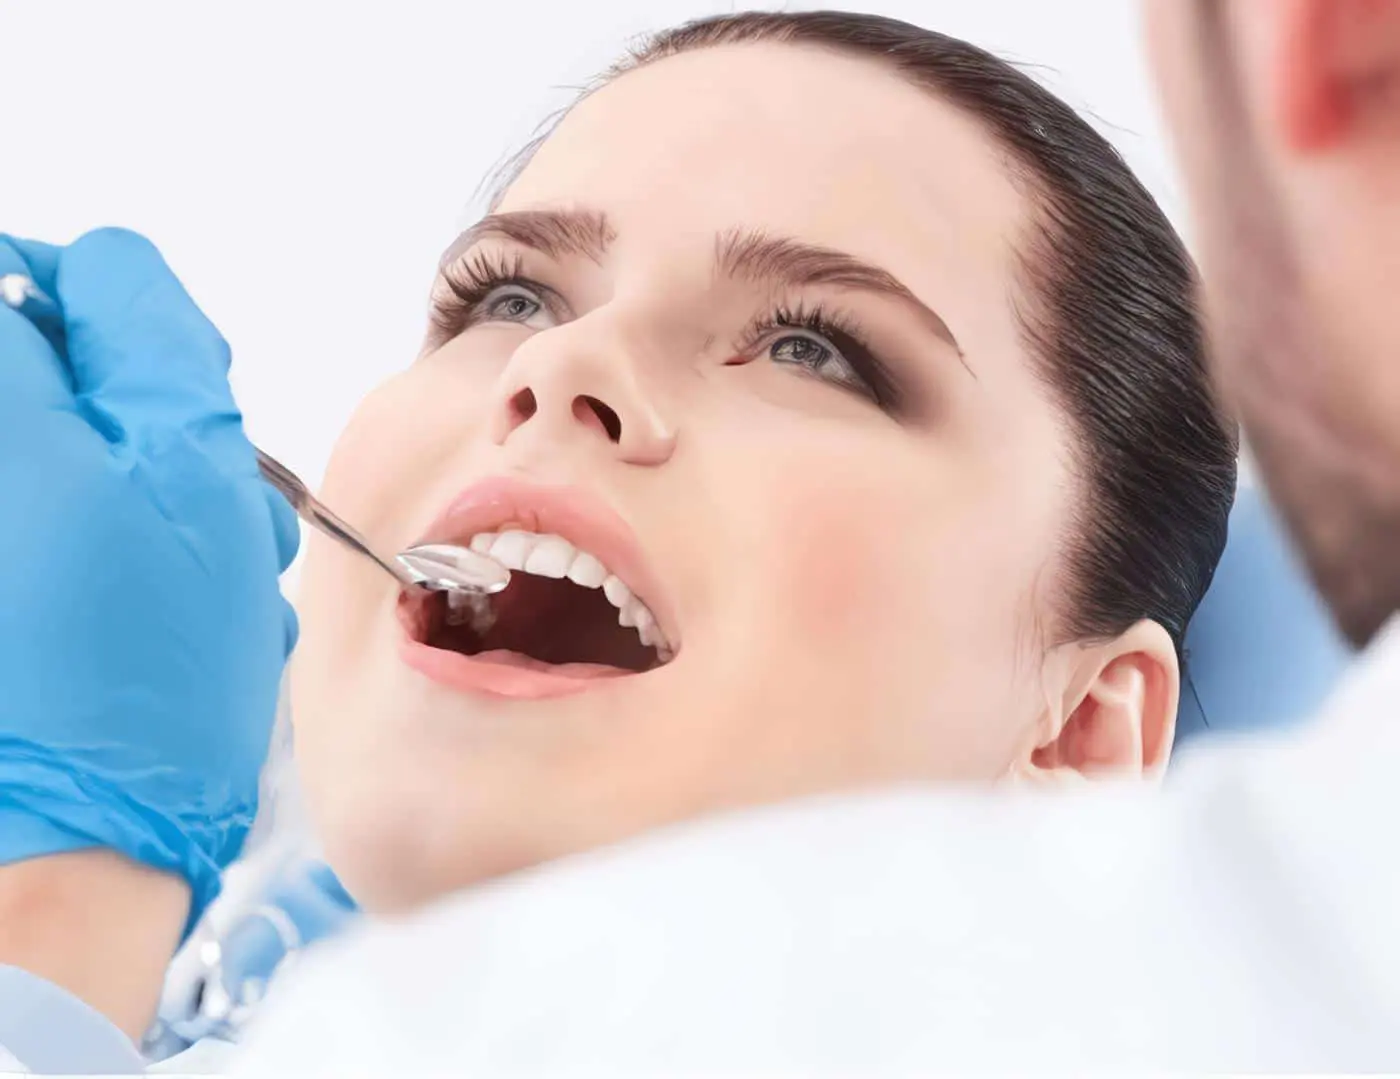 Consultorios Odontológicos